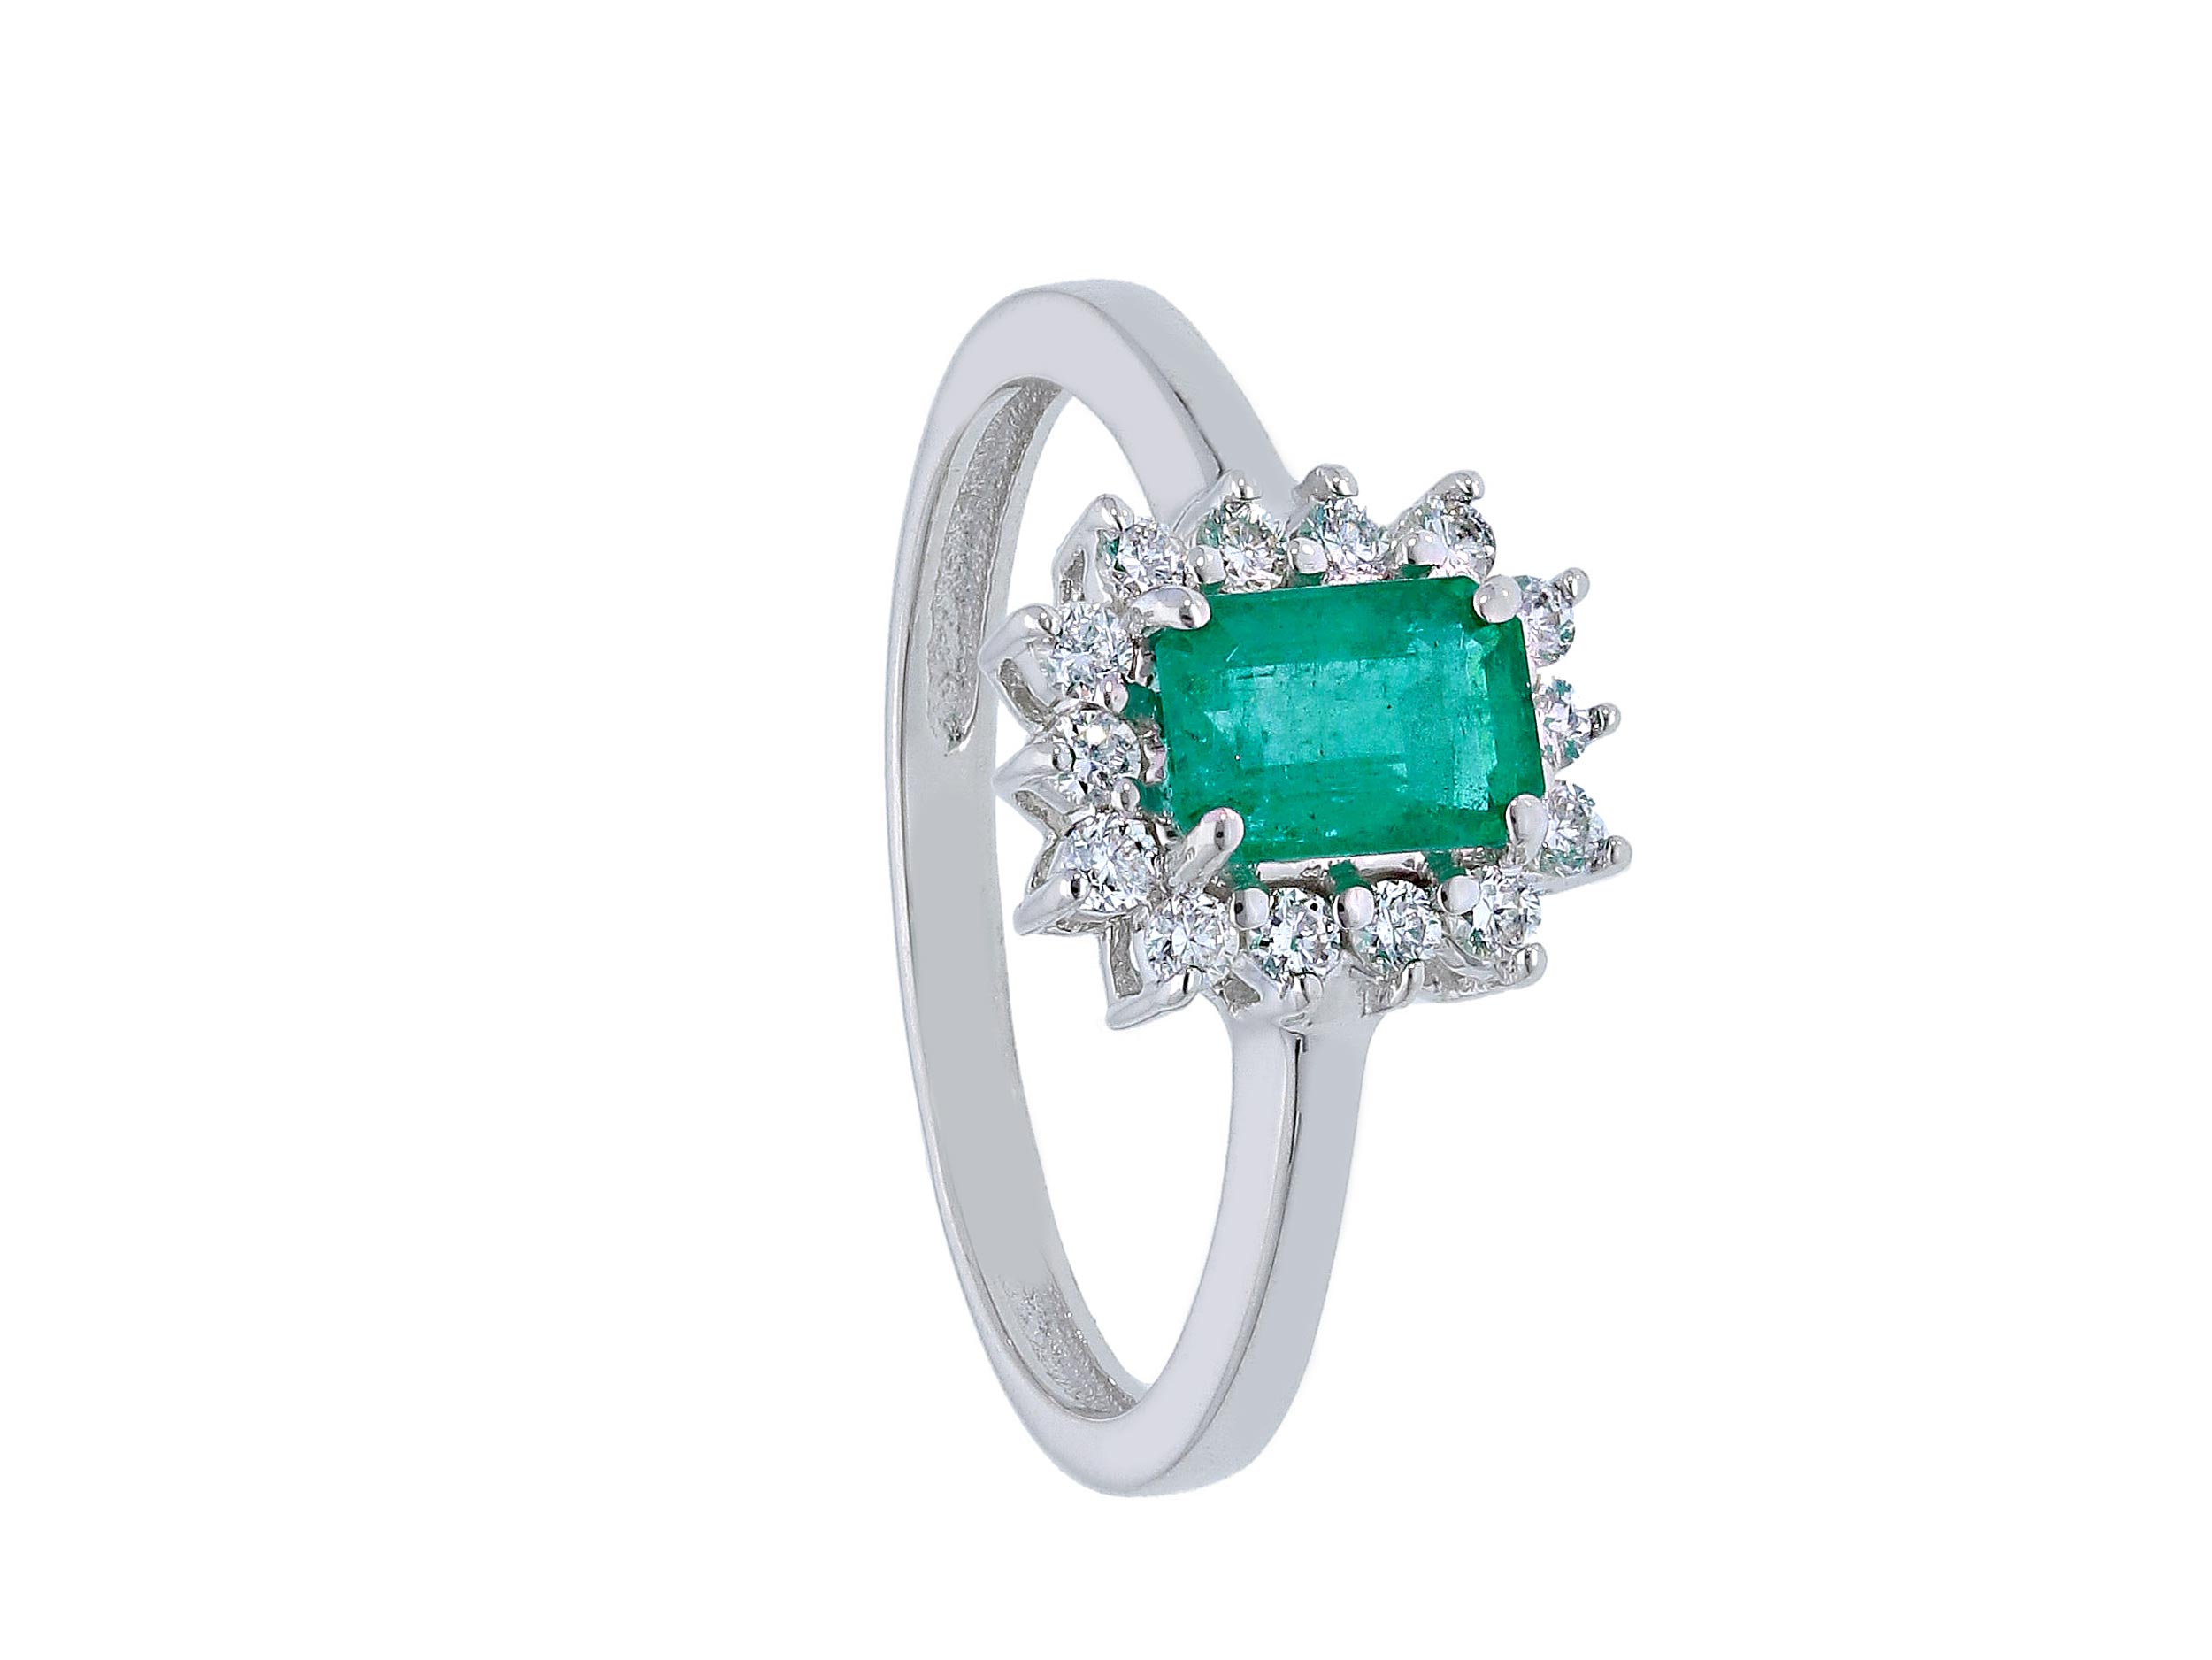 Emerald ring diamonds white gold 750% BON TON Art. 166901